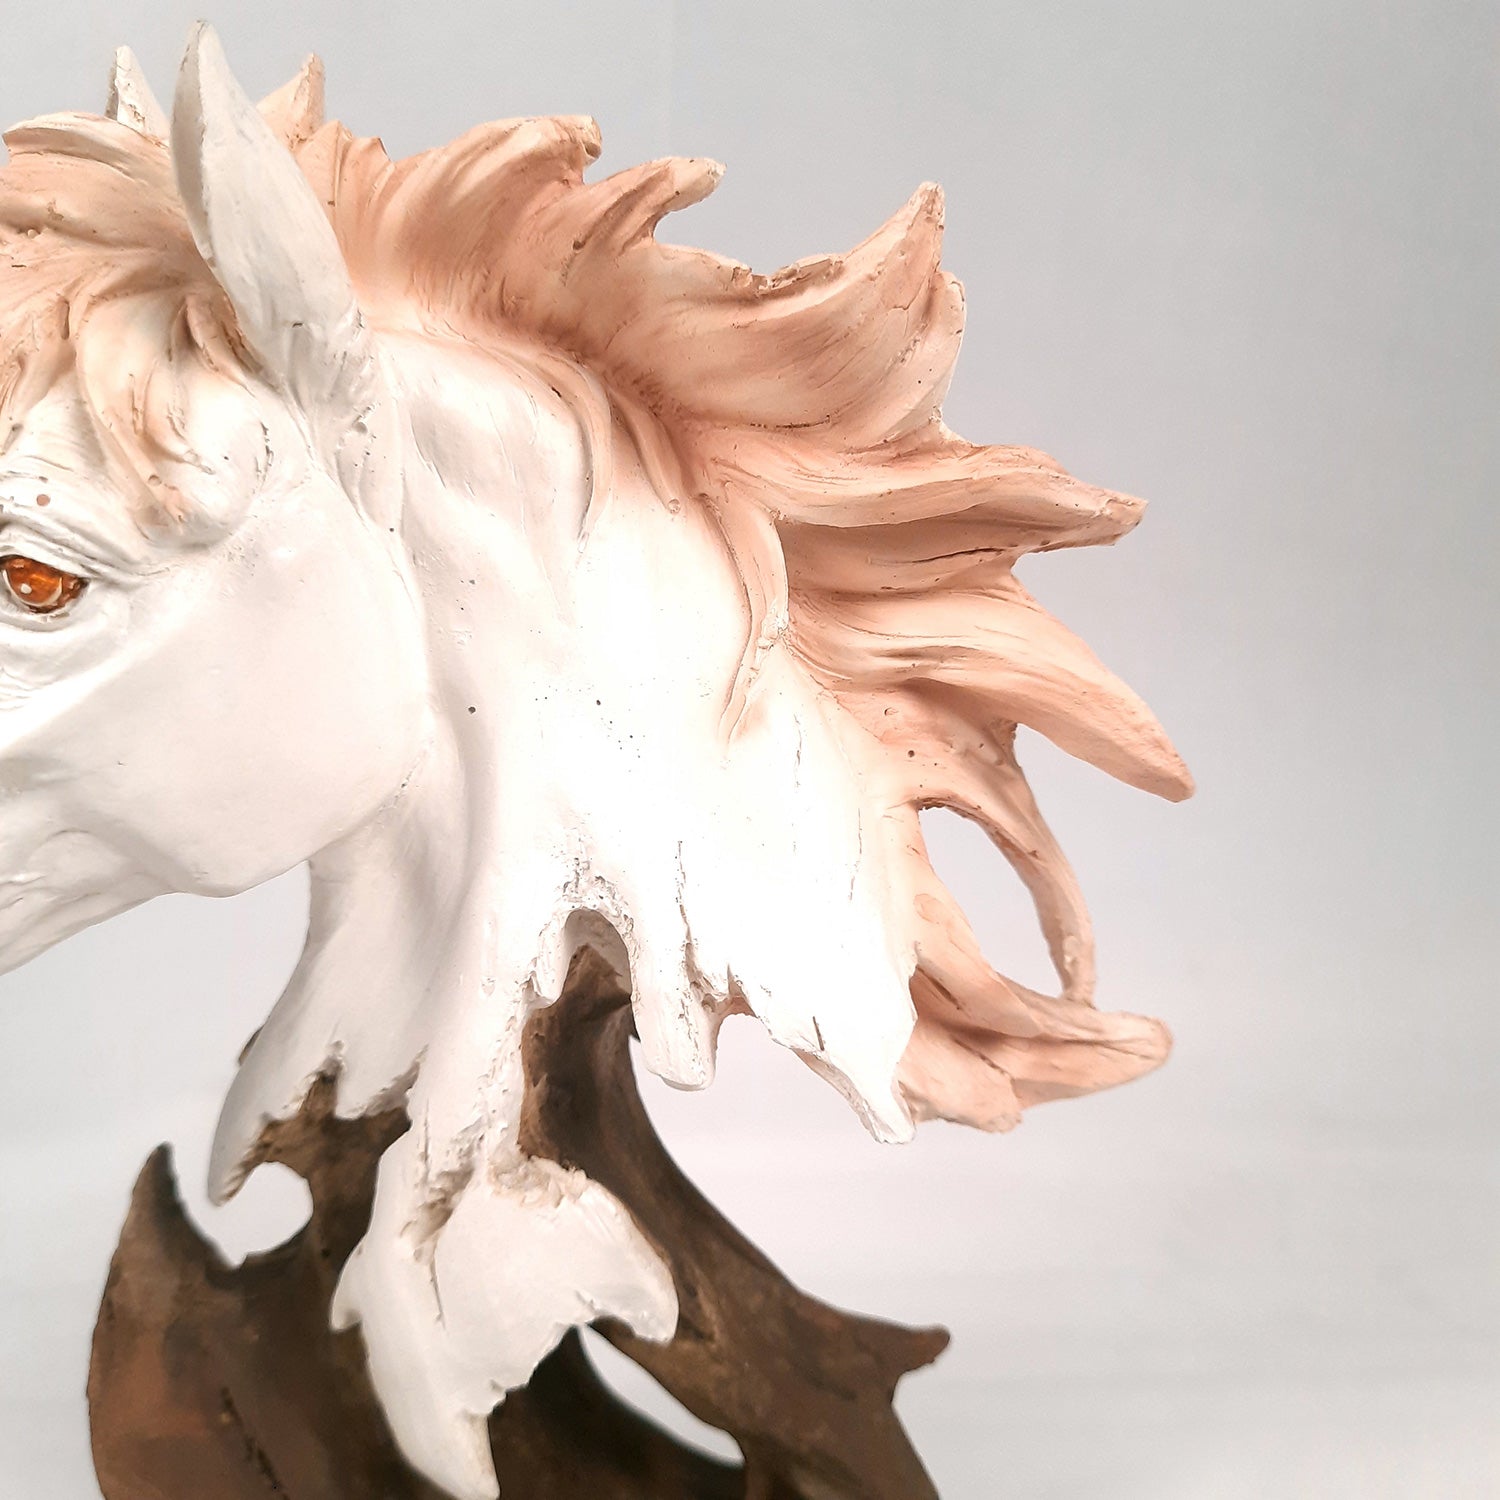 Horse Statue | Horse Face Showpiece Vastu, Fengshui Figurine | Animal Figurines - For Home, Living room Decor, Gifts, For Money & Wealth - 10 Inch - Apkamart #Color_White